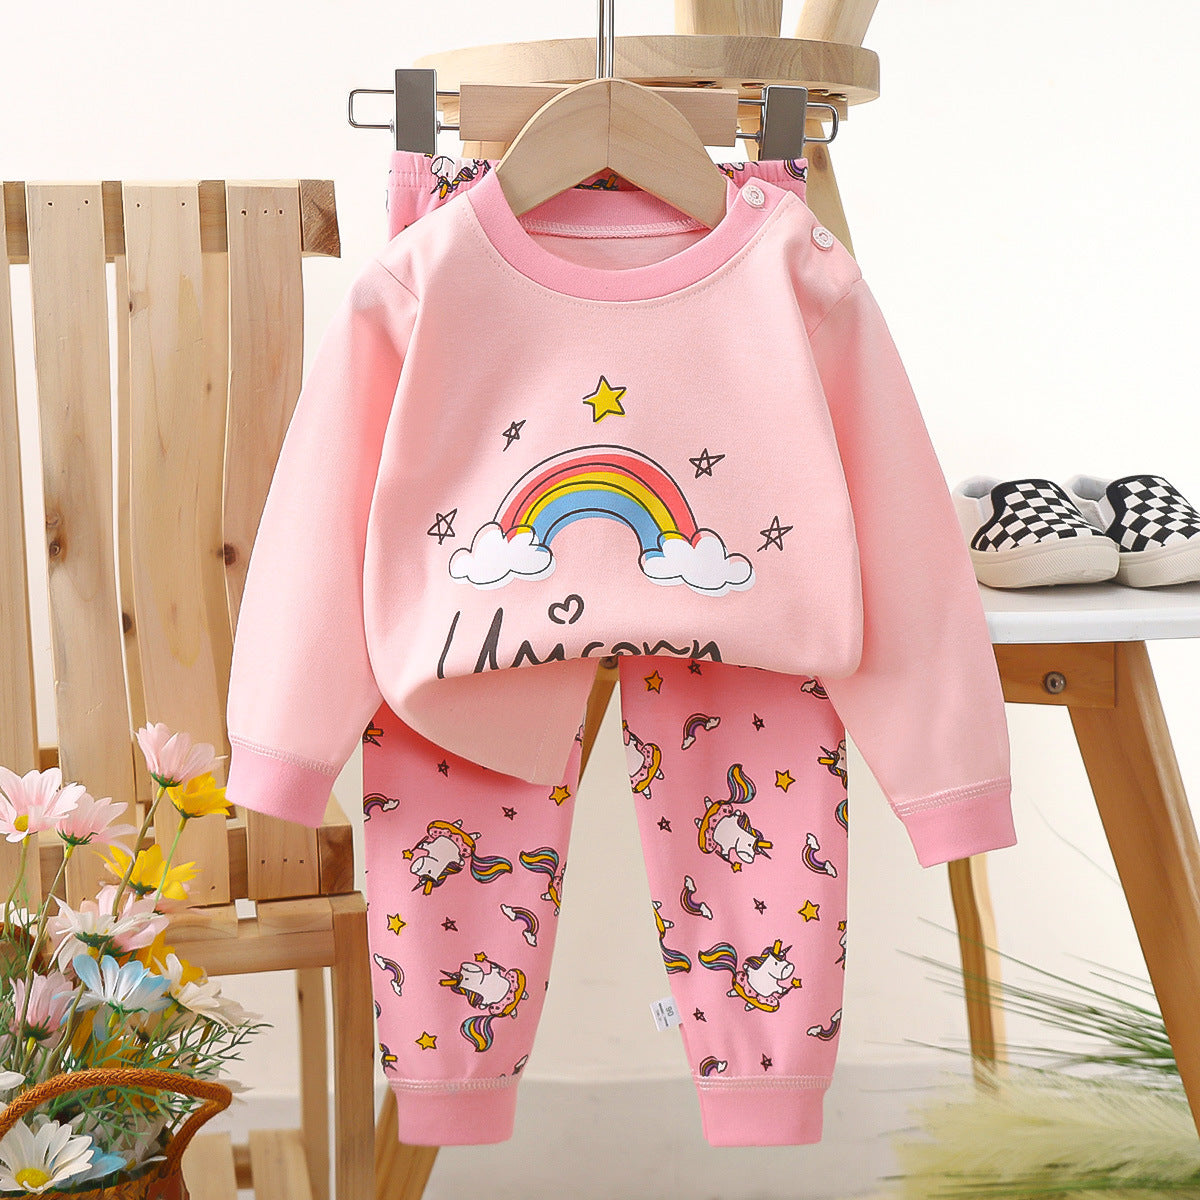 [703107] - Baju Tidur Setelan Piyama Fashion Import Anak Perempuan - Motif Rainbow Star